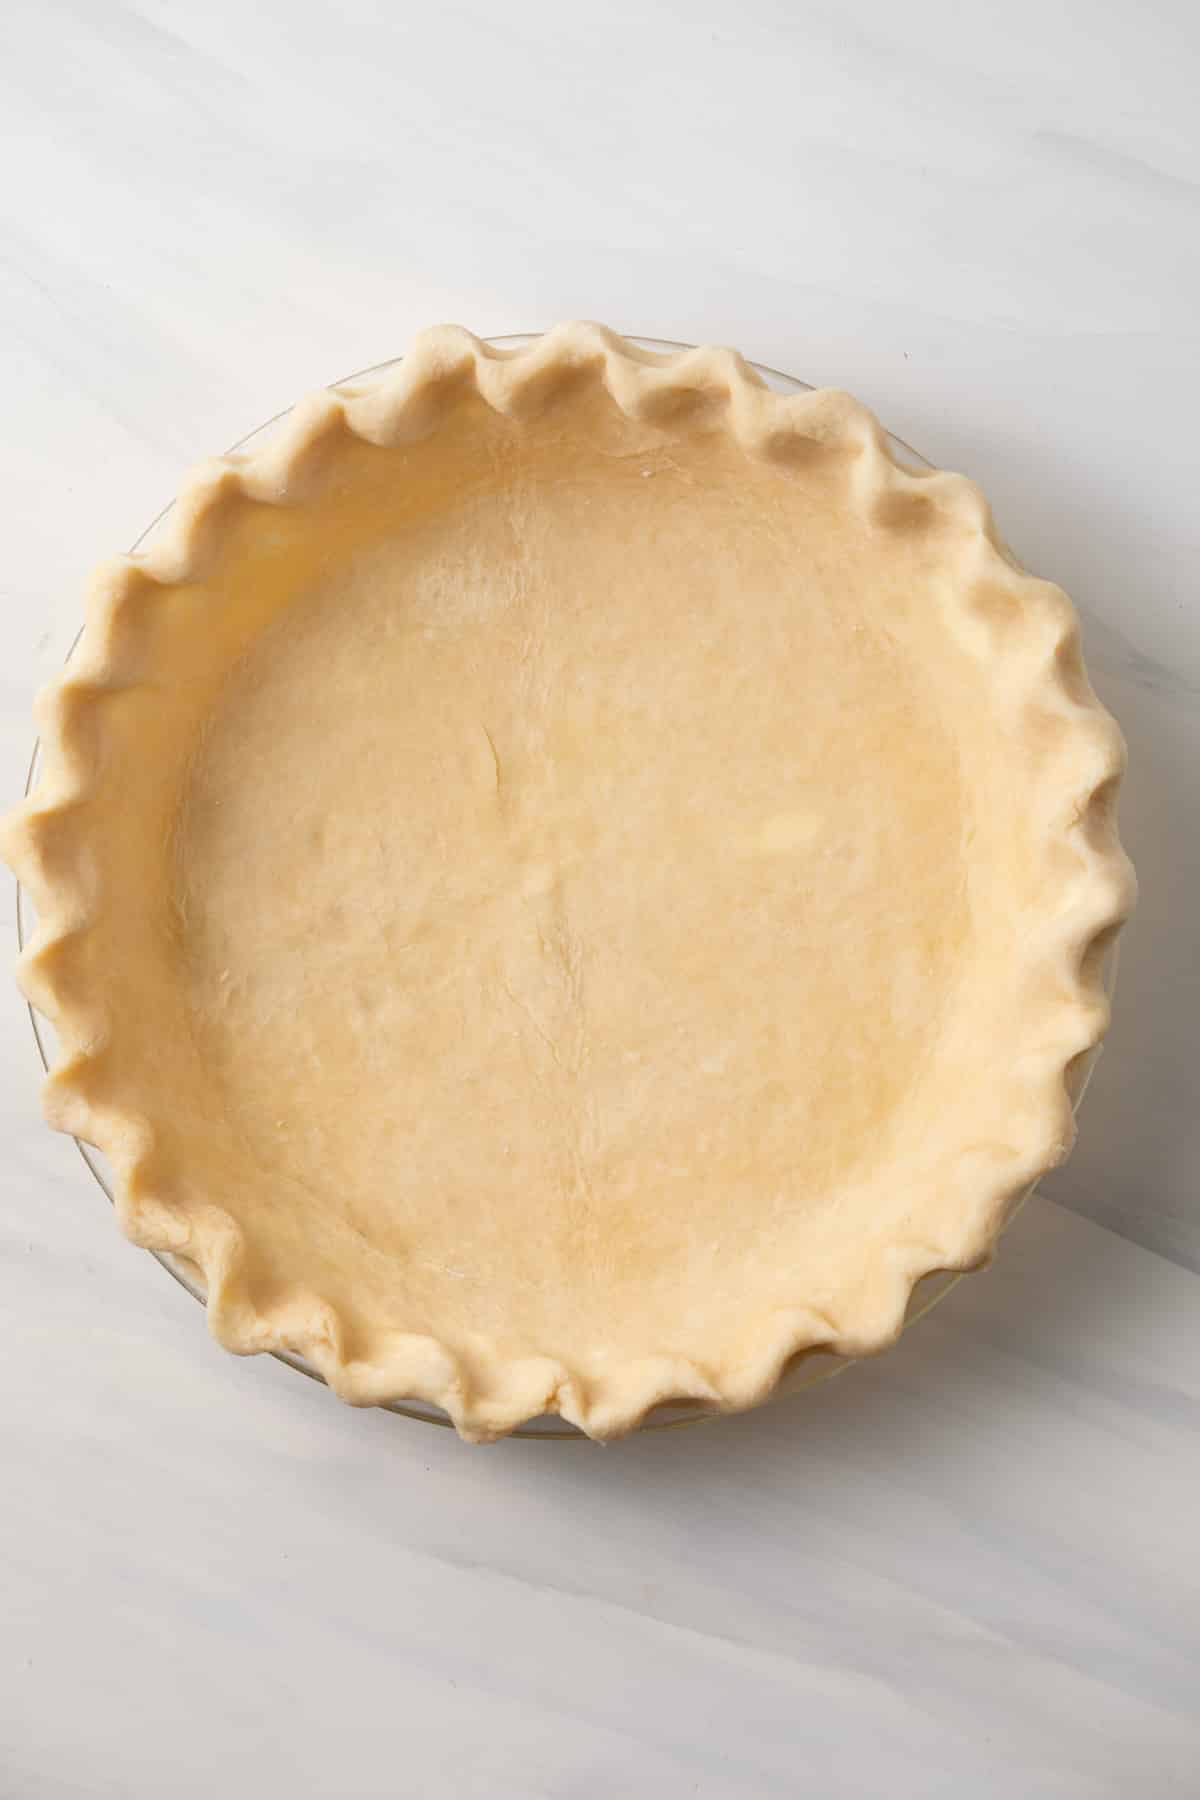 Pie crust in glass pie pan.